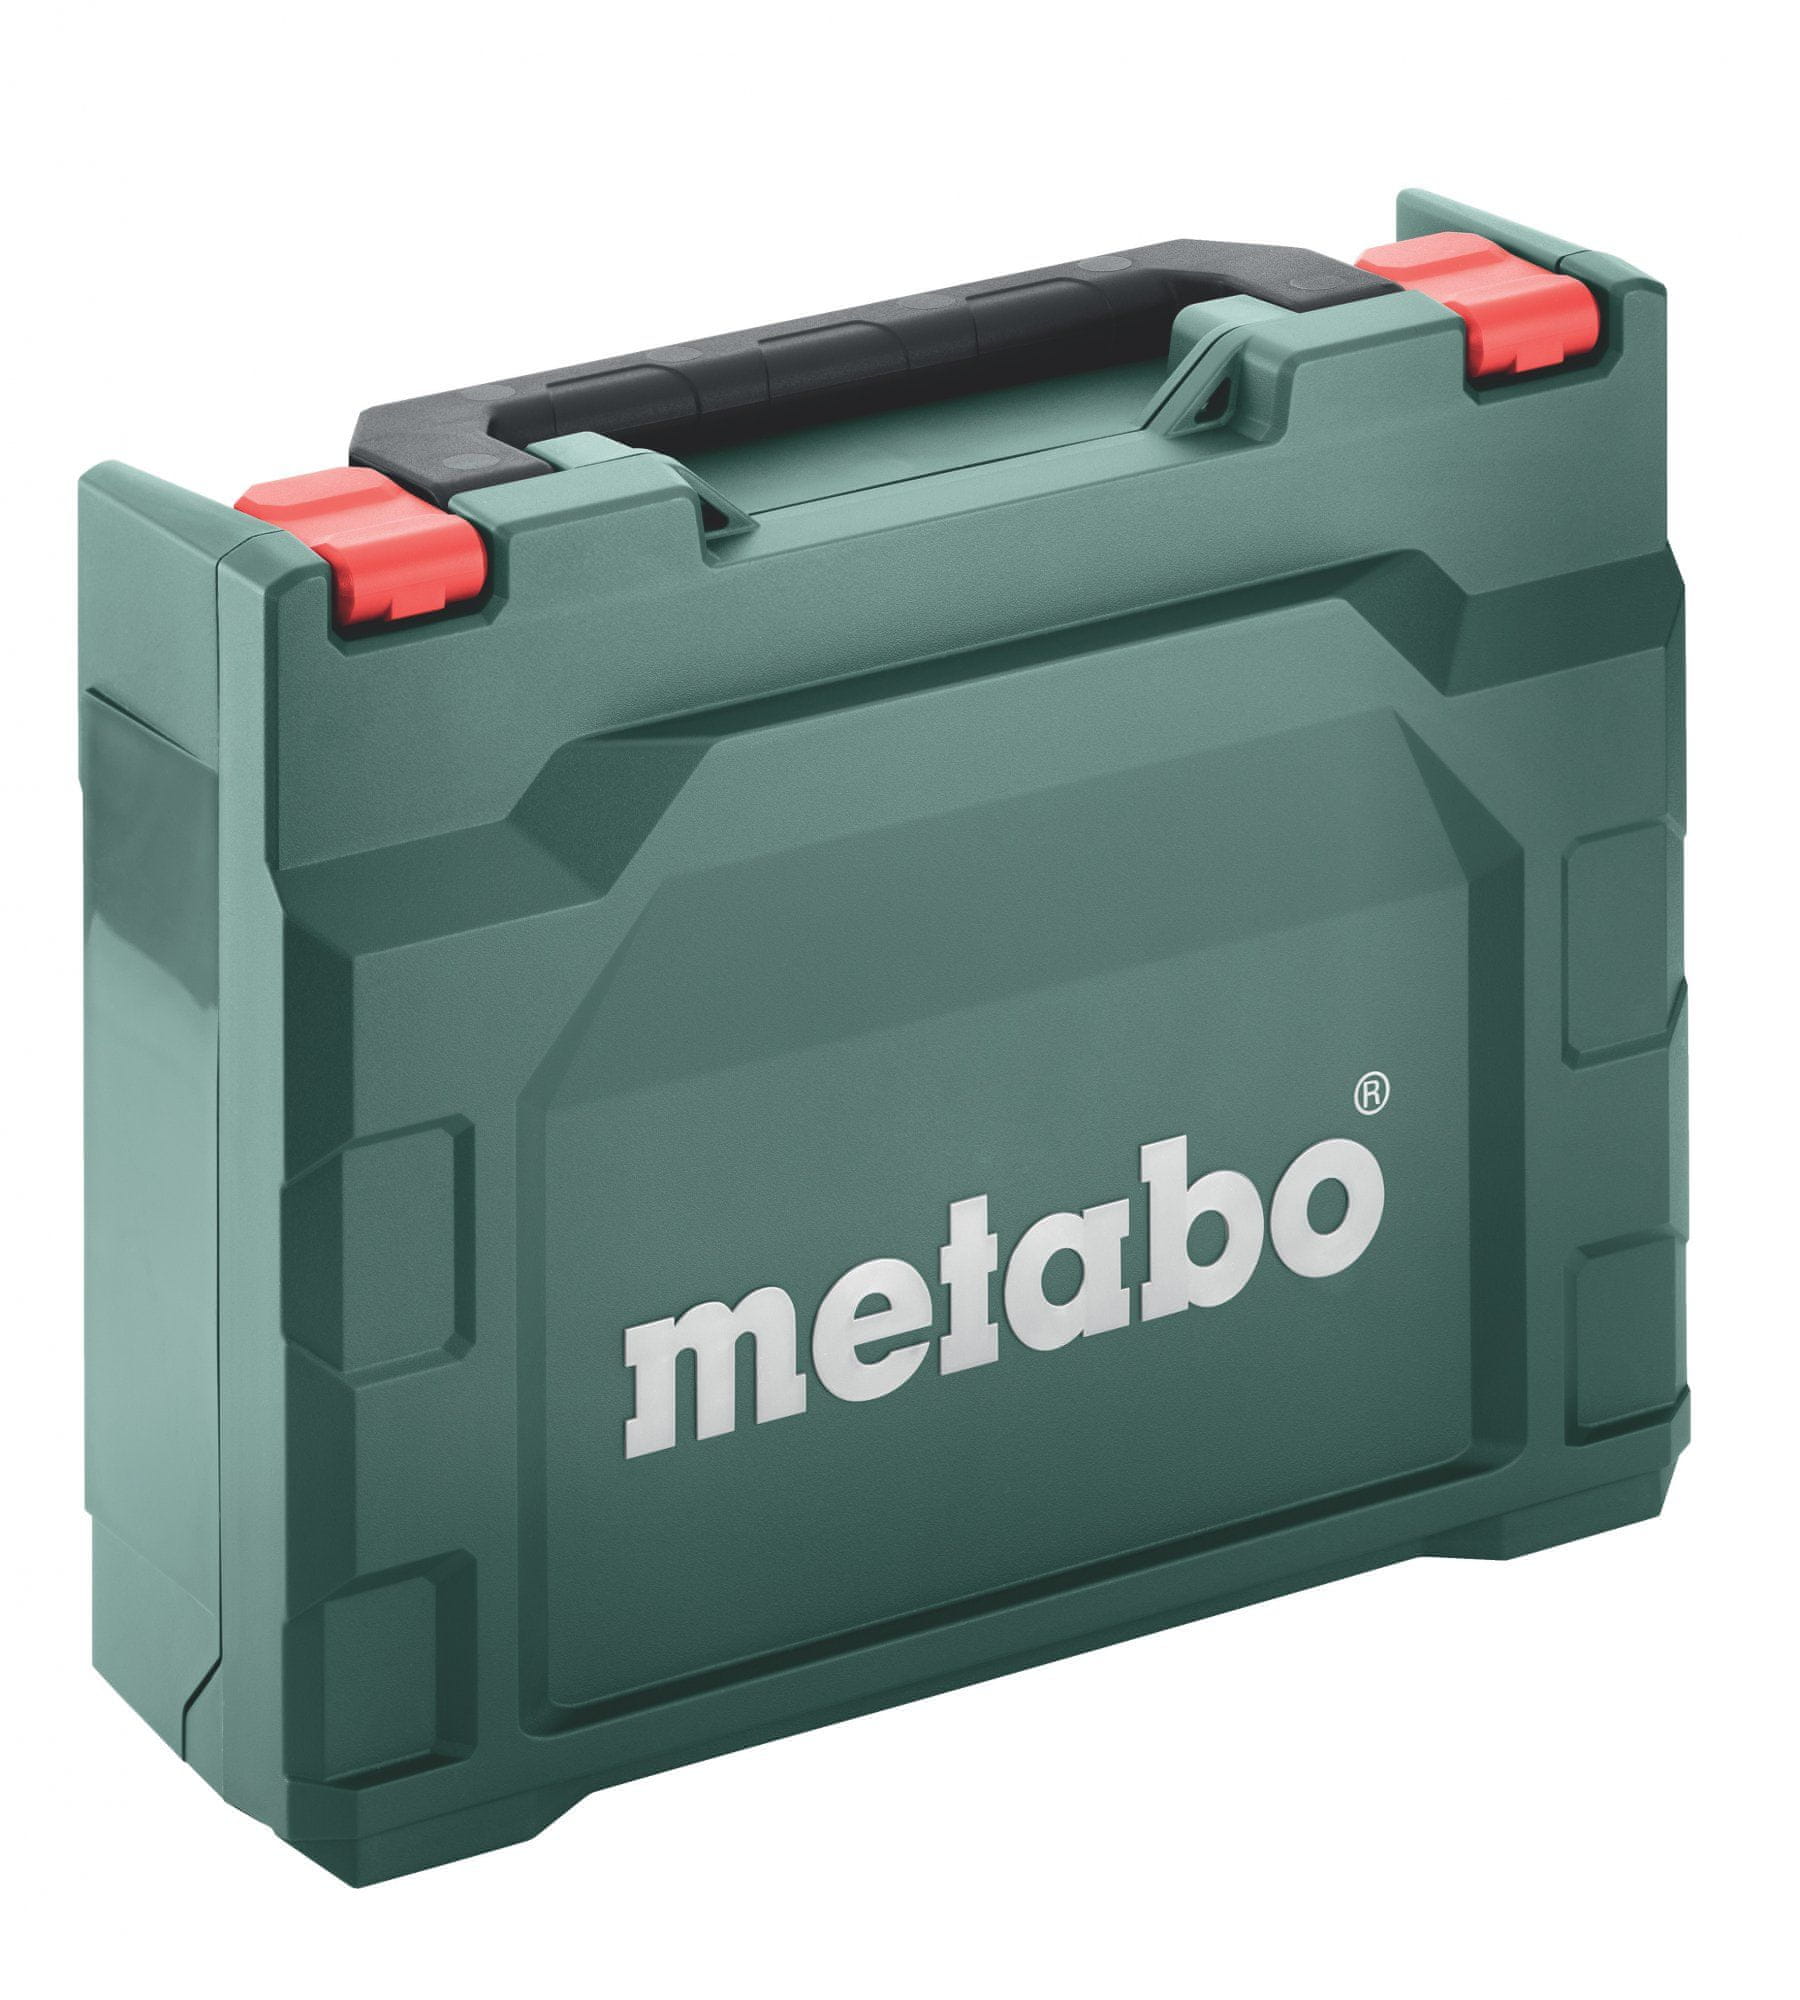 Metabo bs basic 12v. 600984500 Metabo. Metabo POWERMAXX BS 12 кейс. Metabo POWERMAXX BS Basic 600984500. Metabo POWERMAXX Basic.